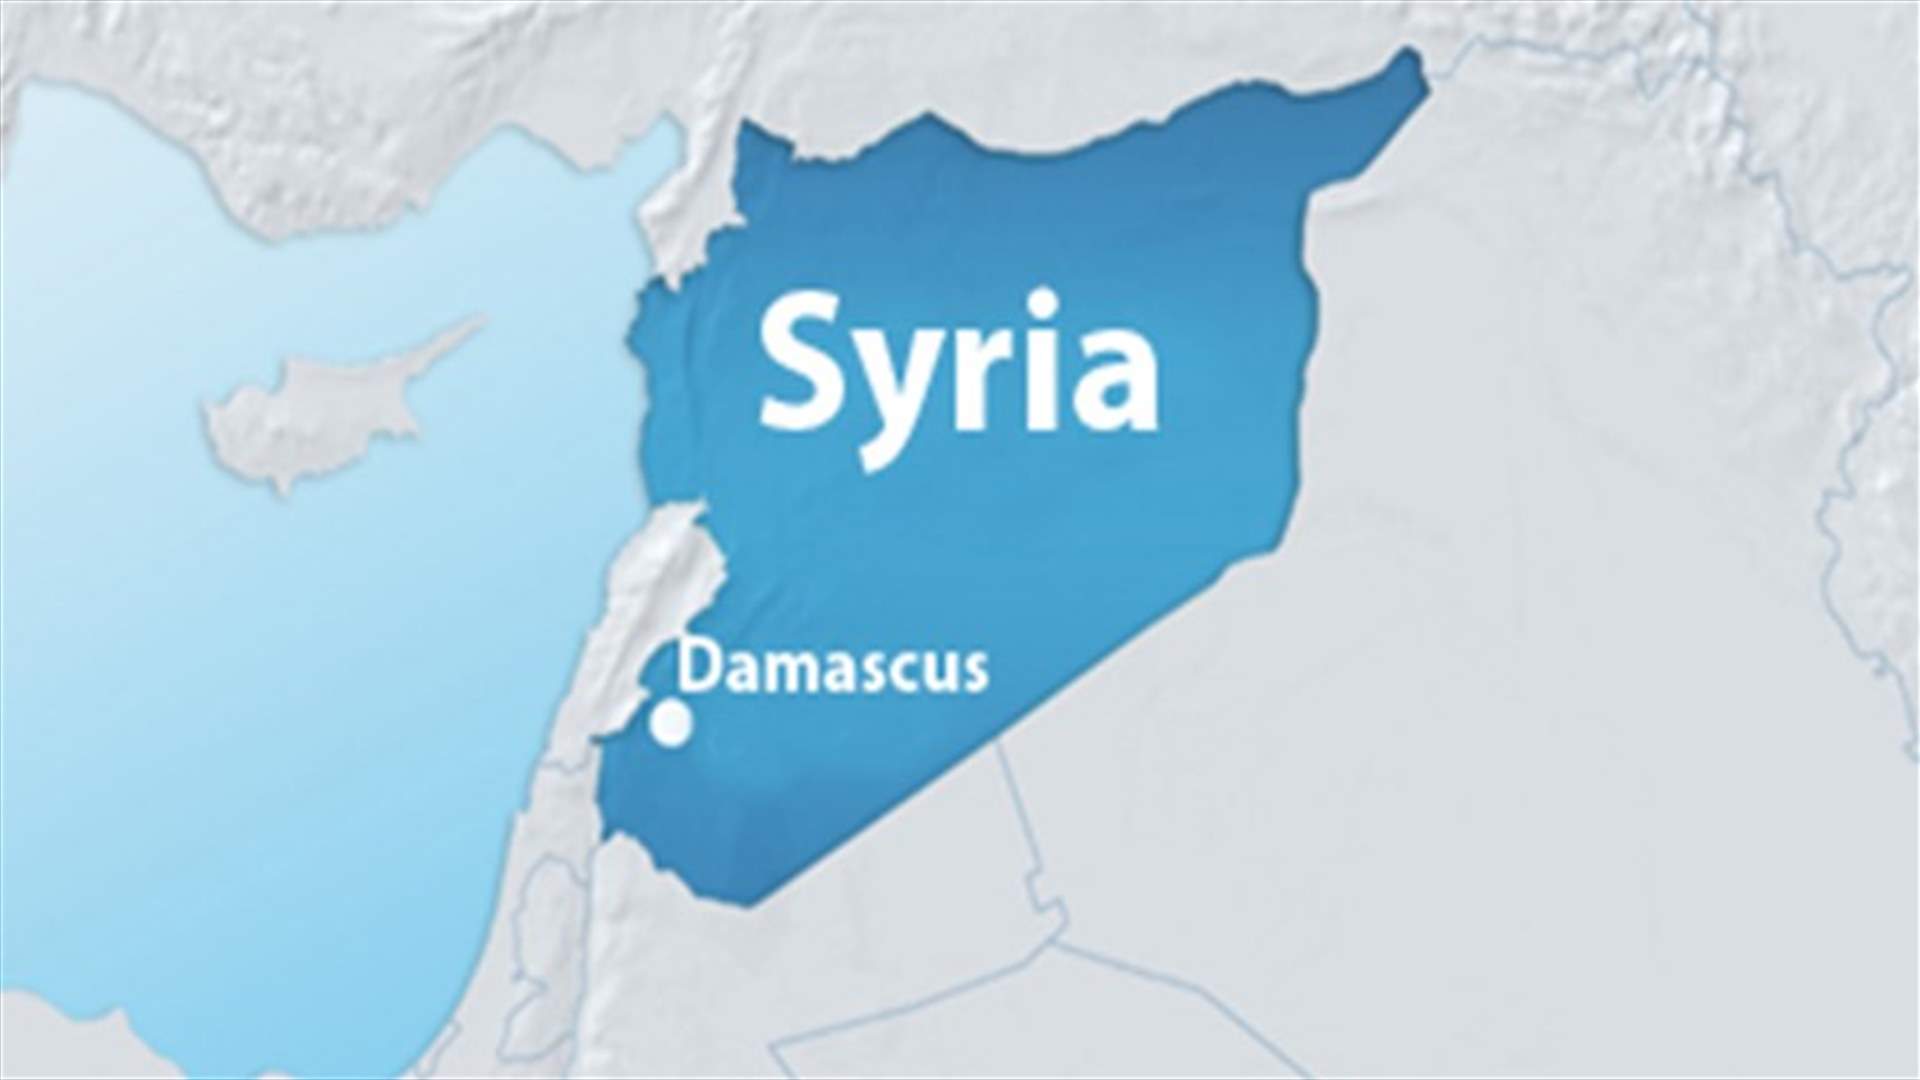 Syrian peace talks in quagmire as rebels prepare for more war